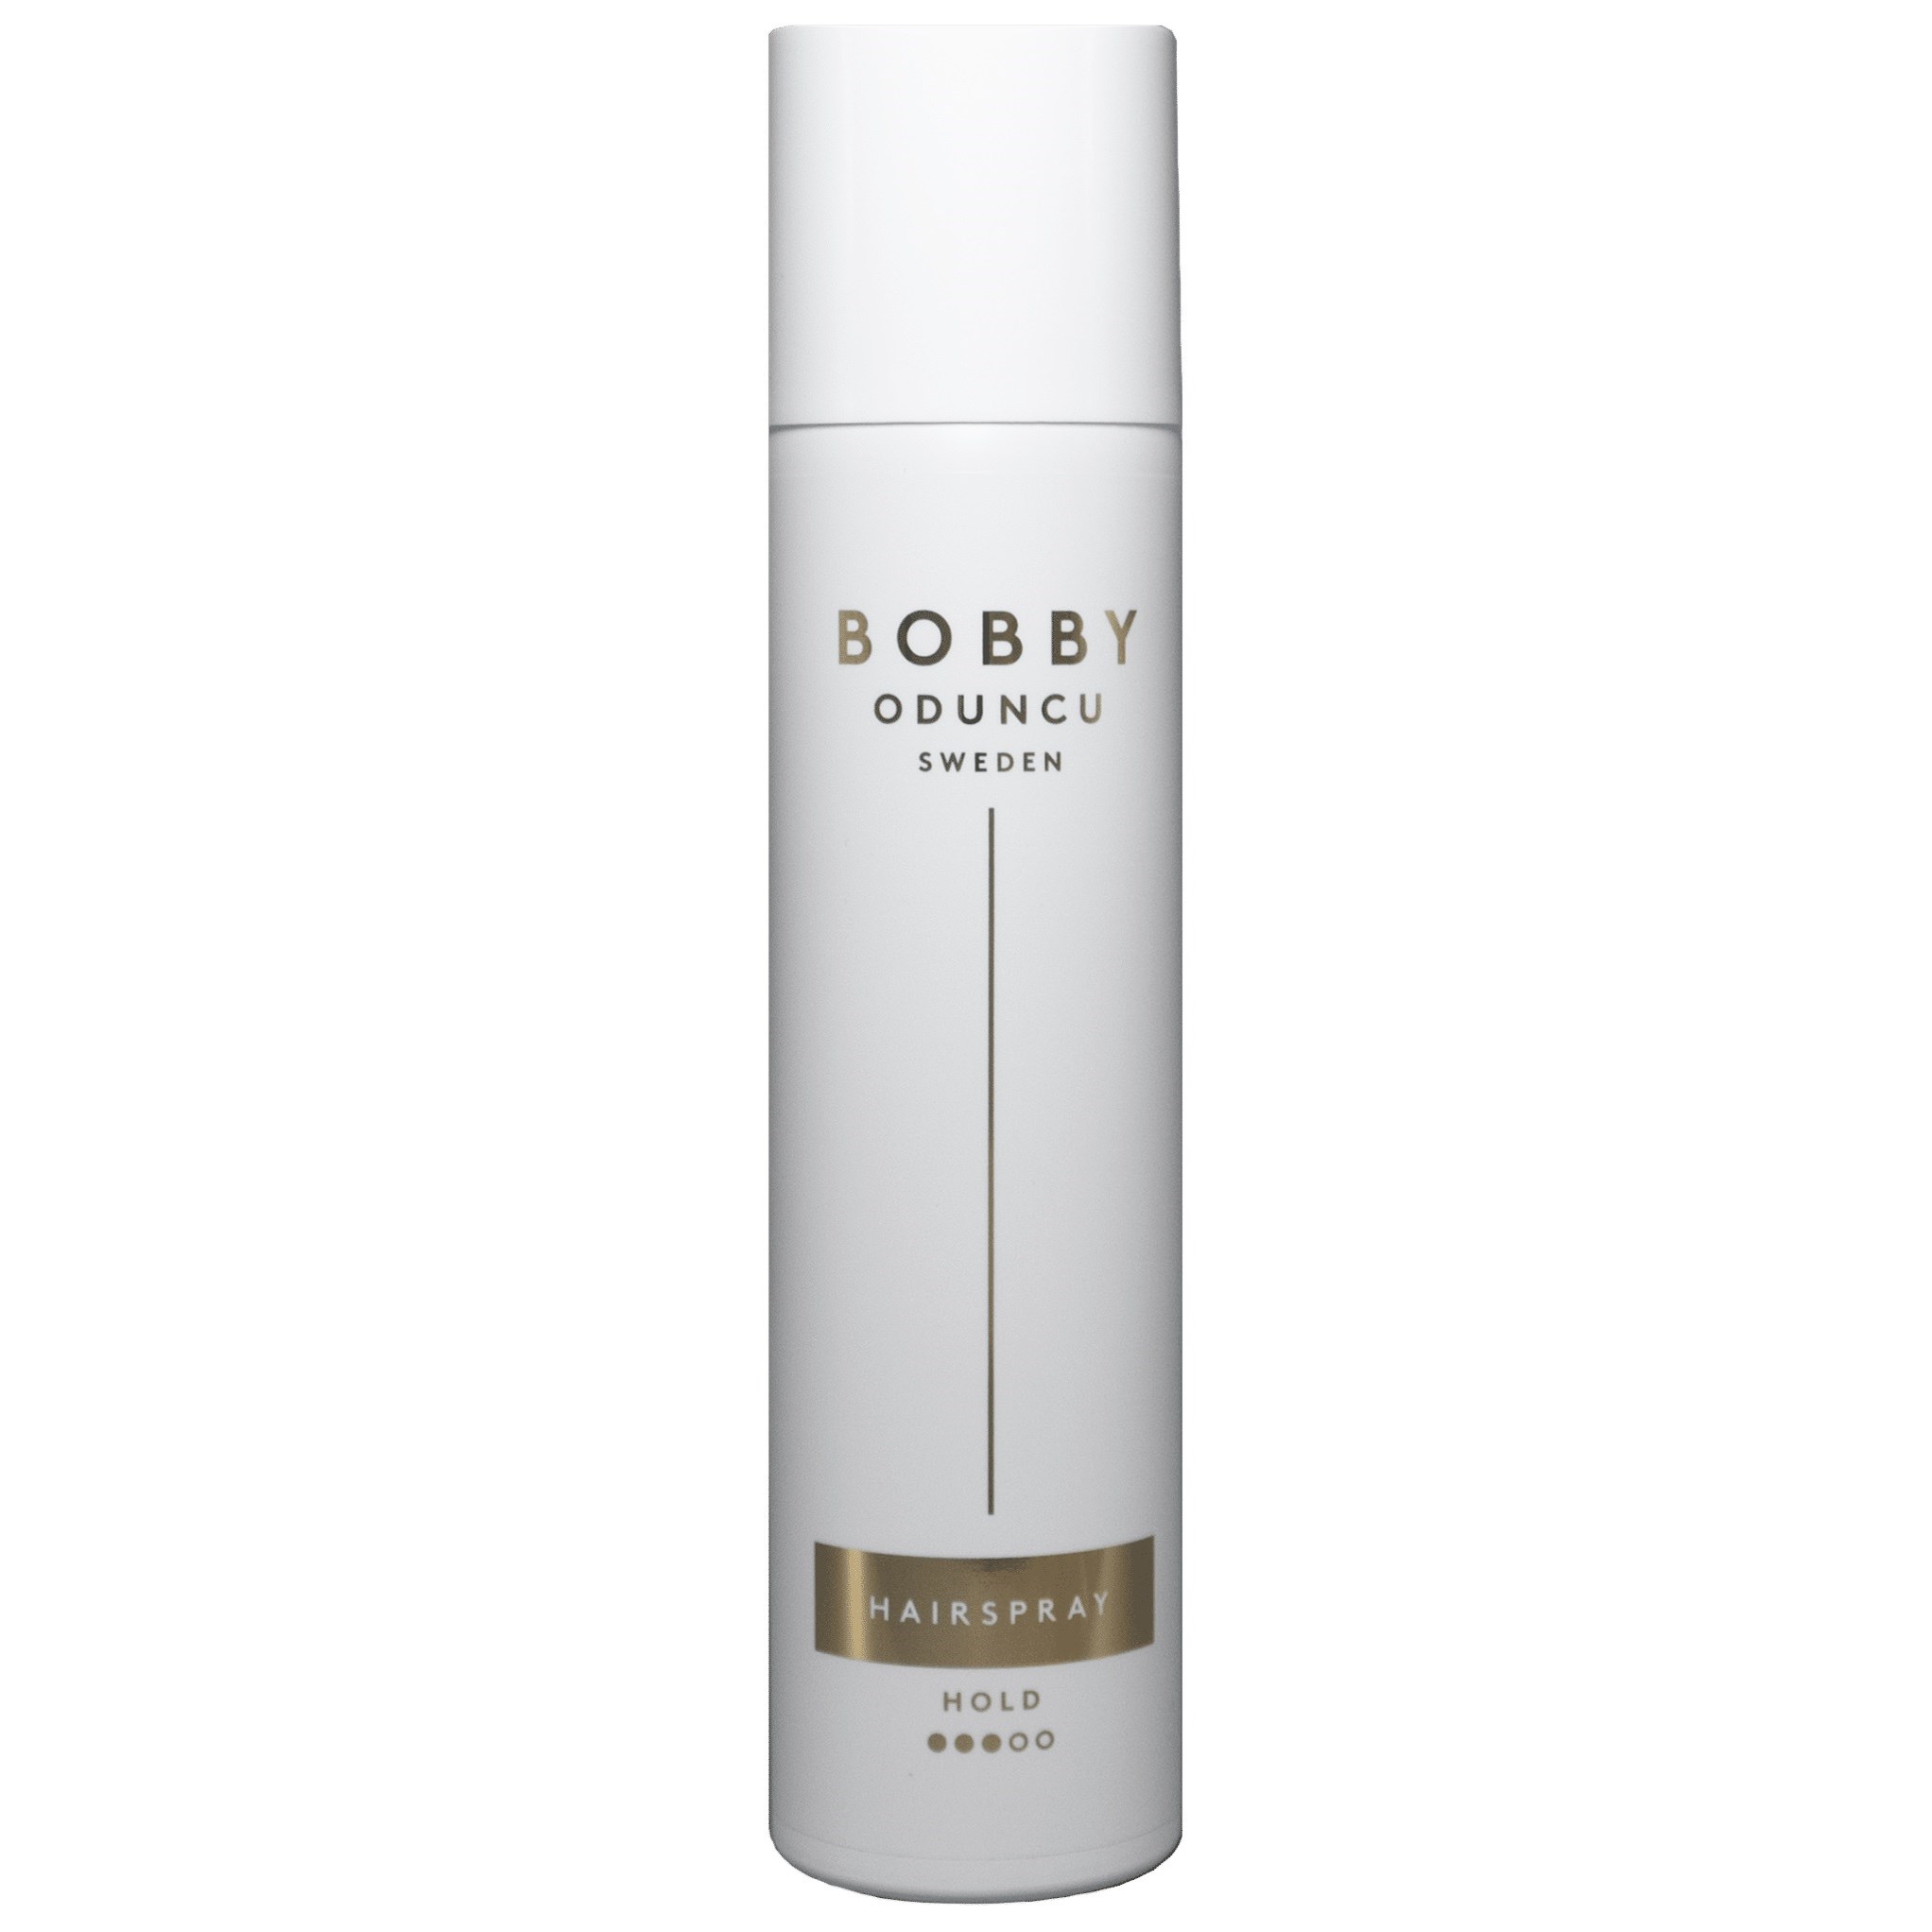 Bobbys Hair Care Multi Repair Hairspray 300 ml